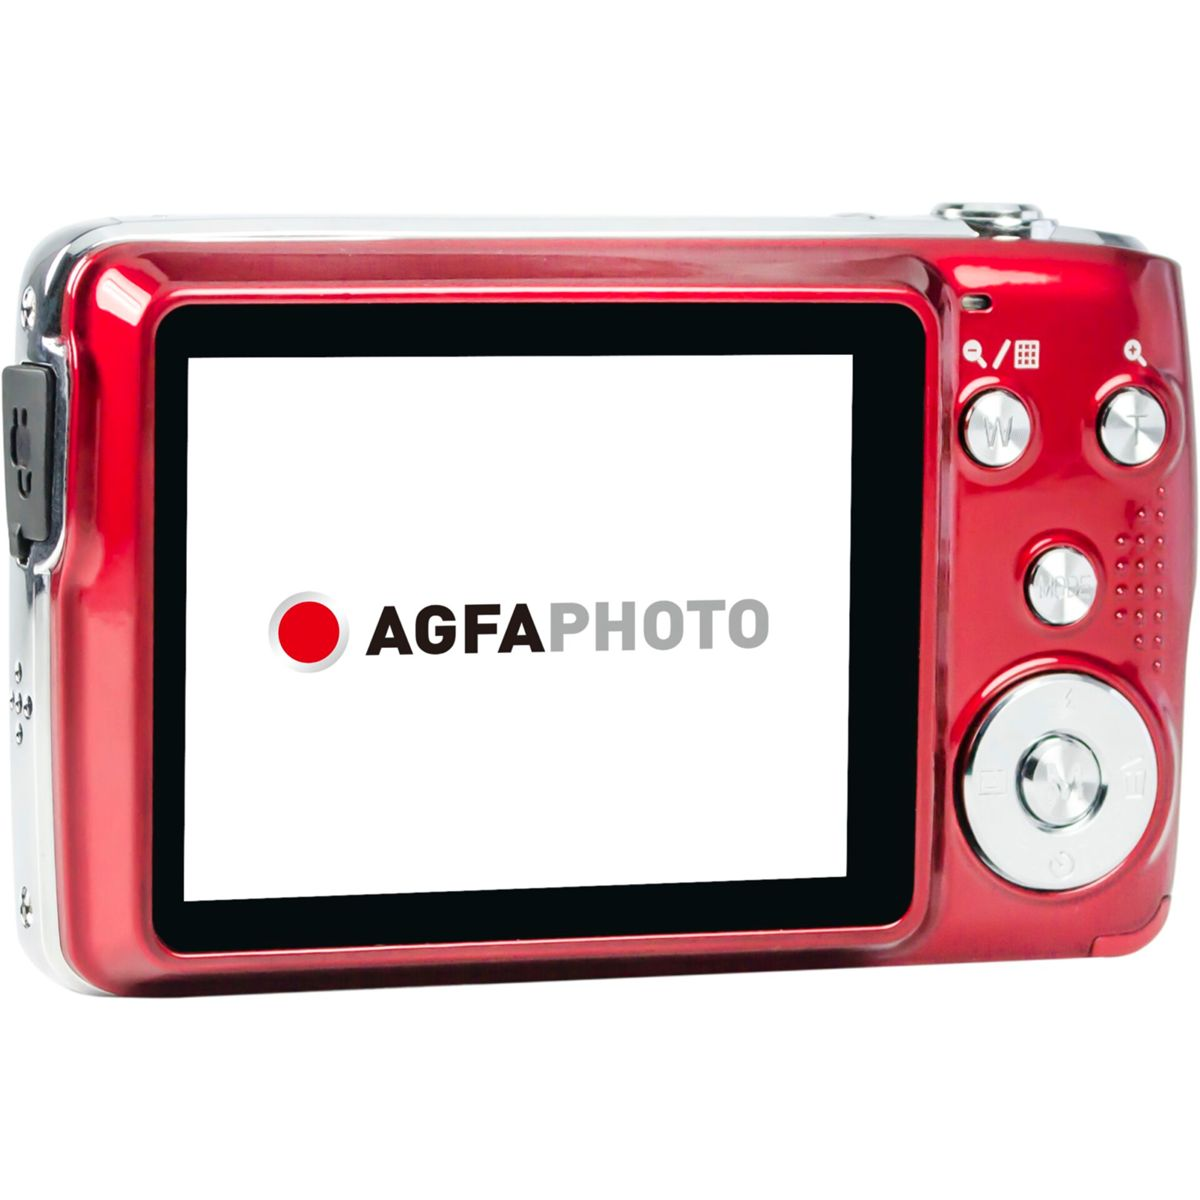 AGFAPHOTO Digitalkamera DC8200 Realishot rot rot-